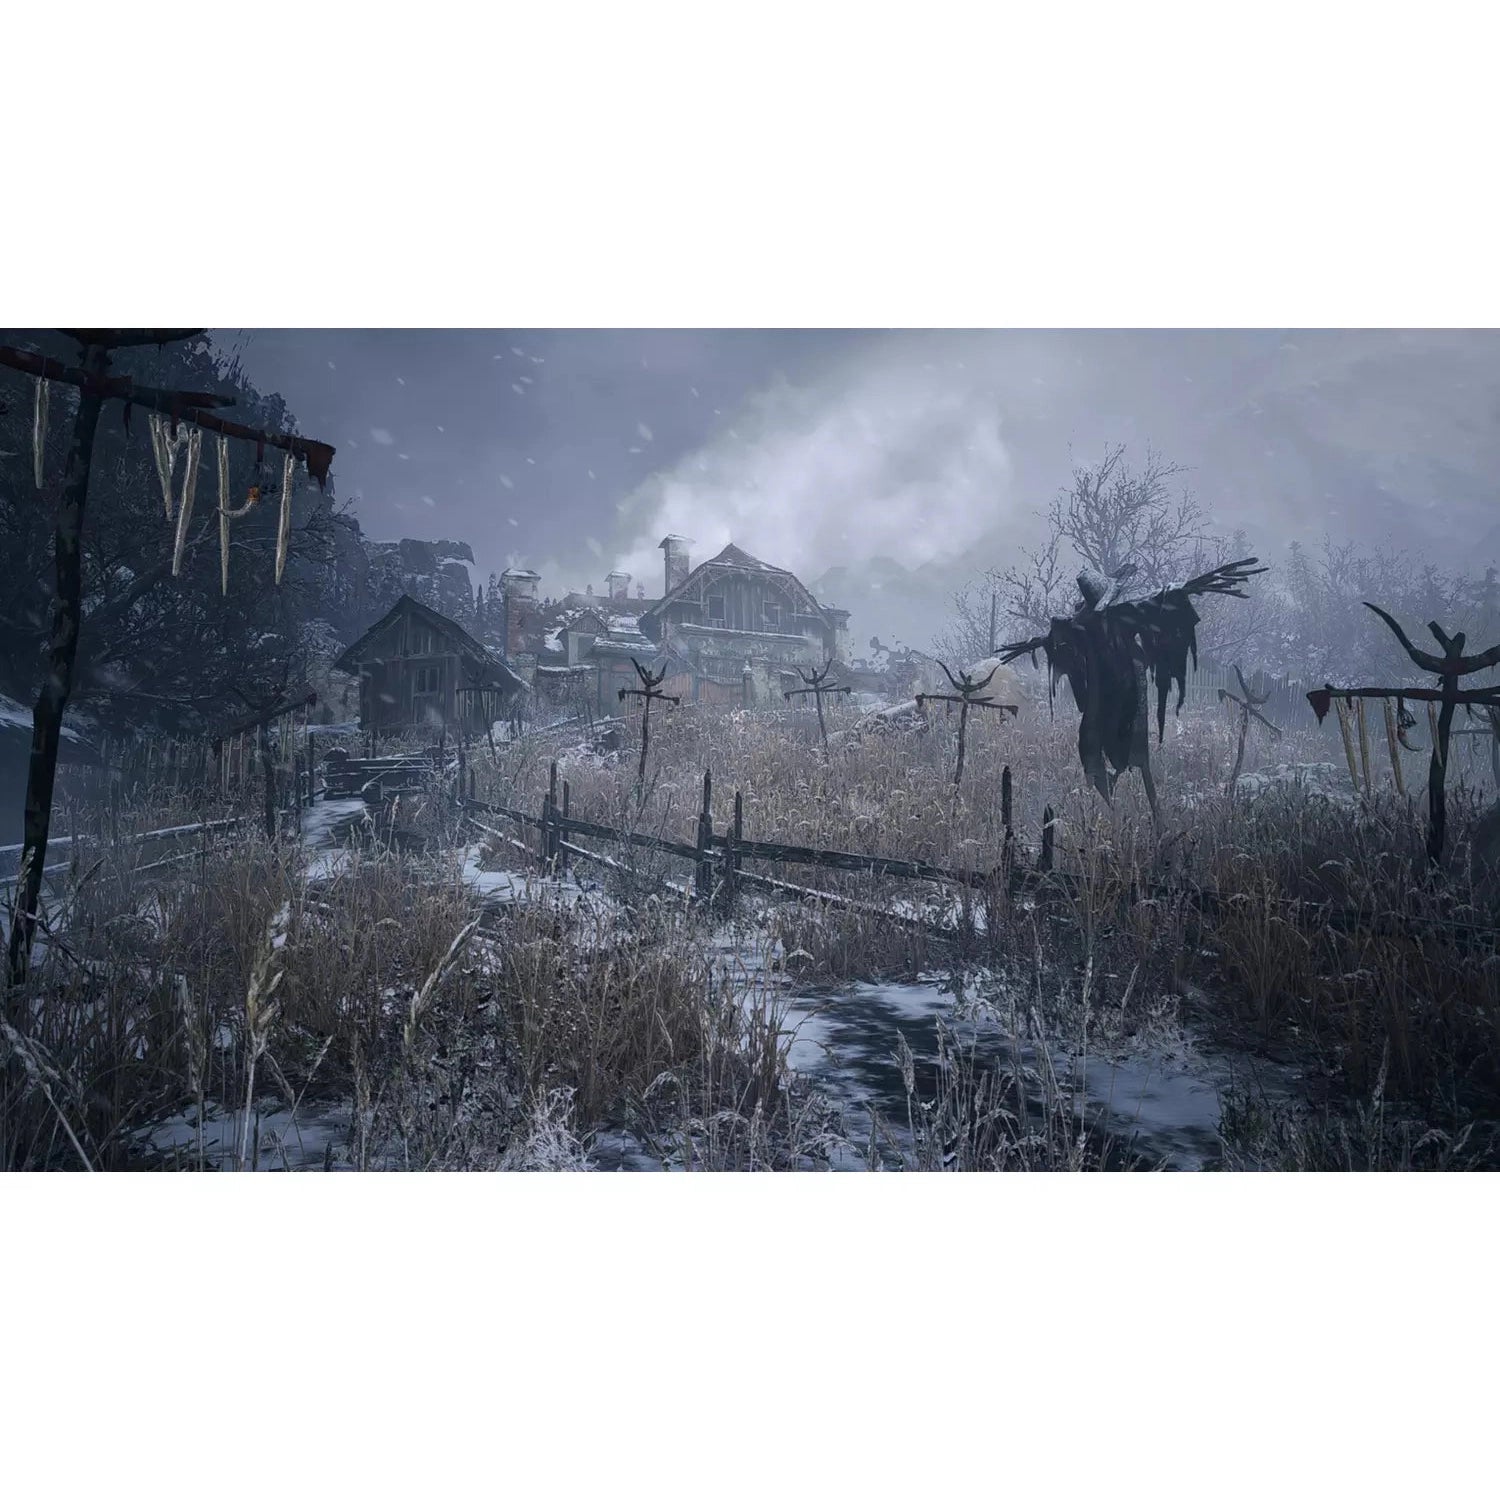 Resident Evil 8 Village (Xbox One)